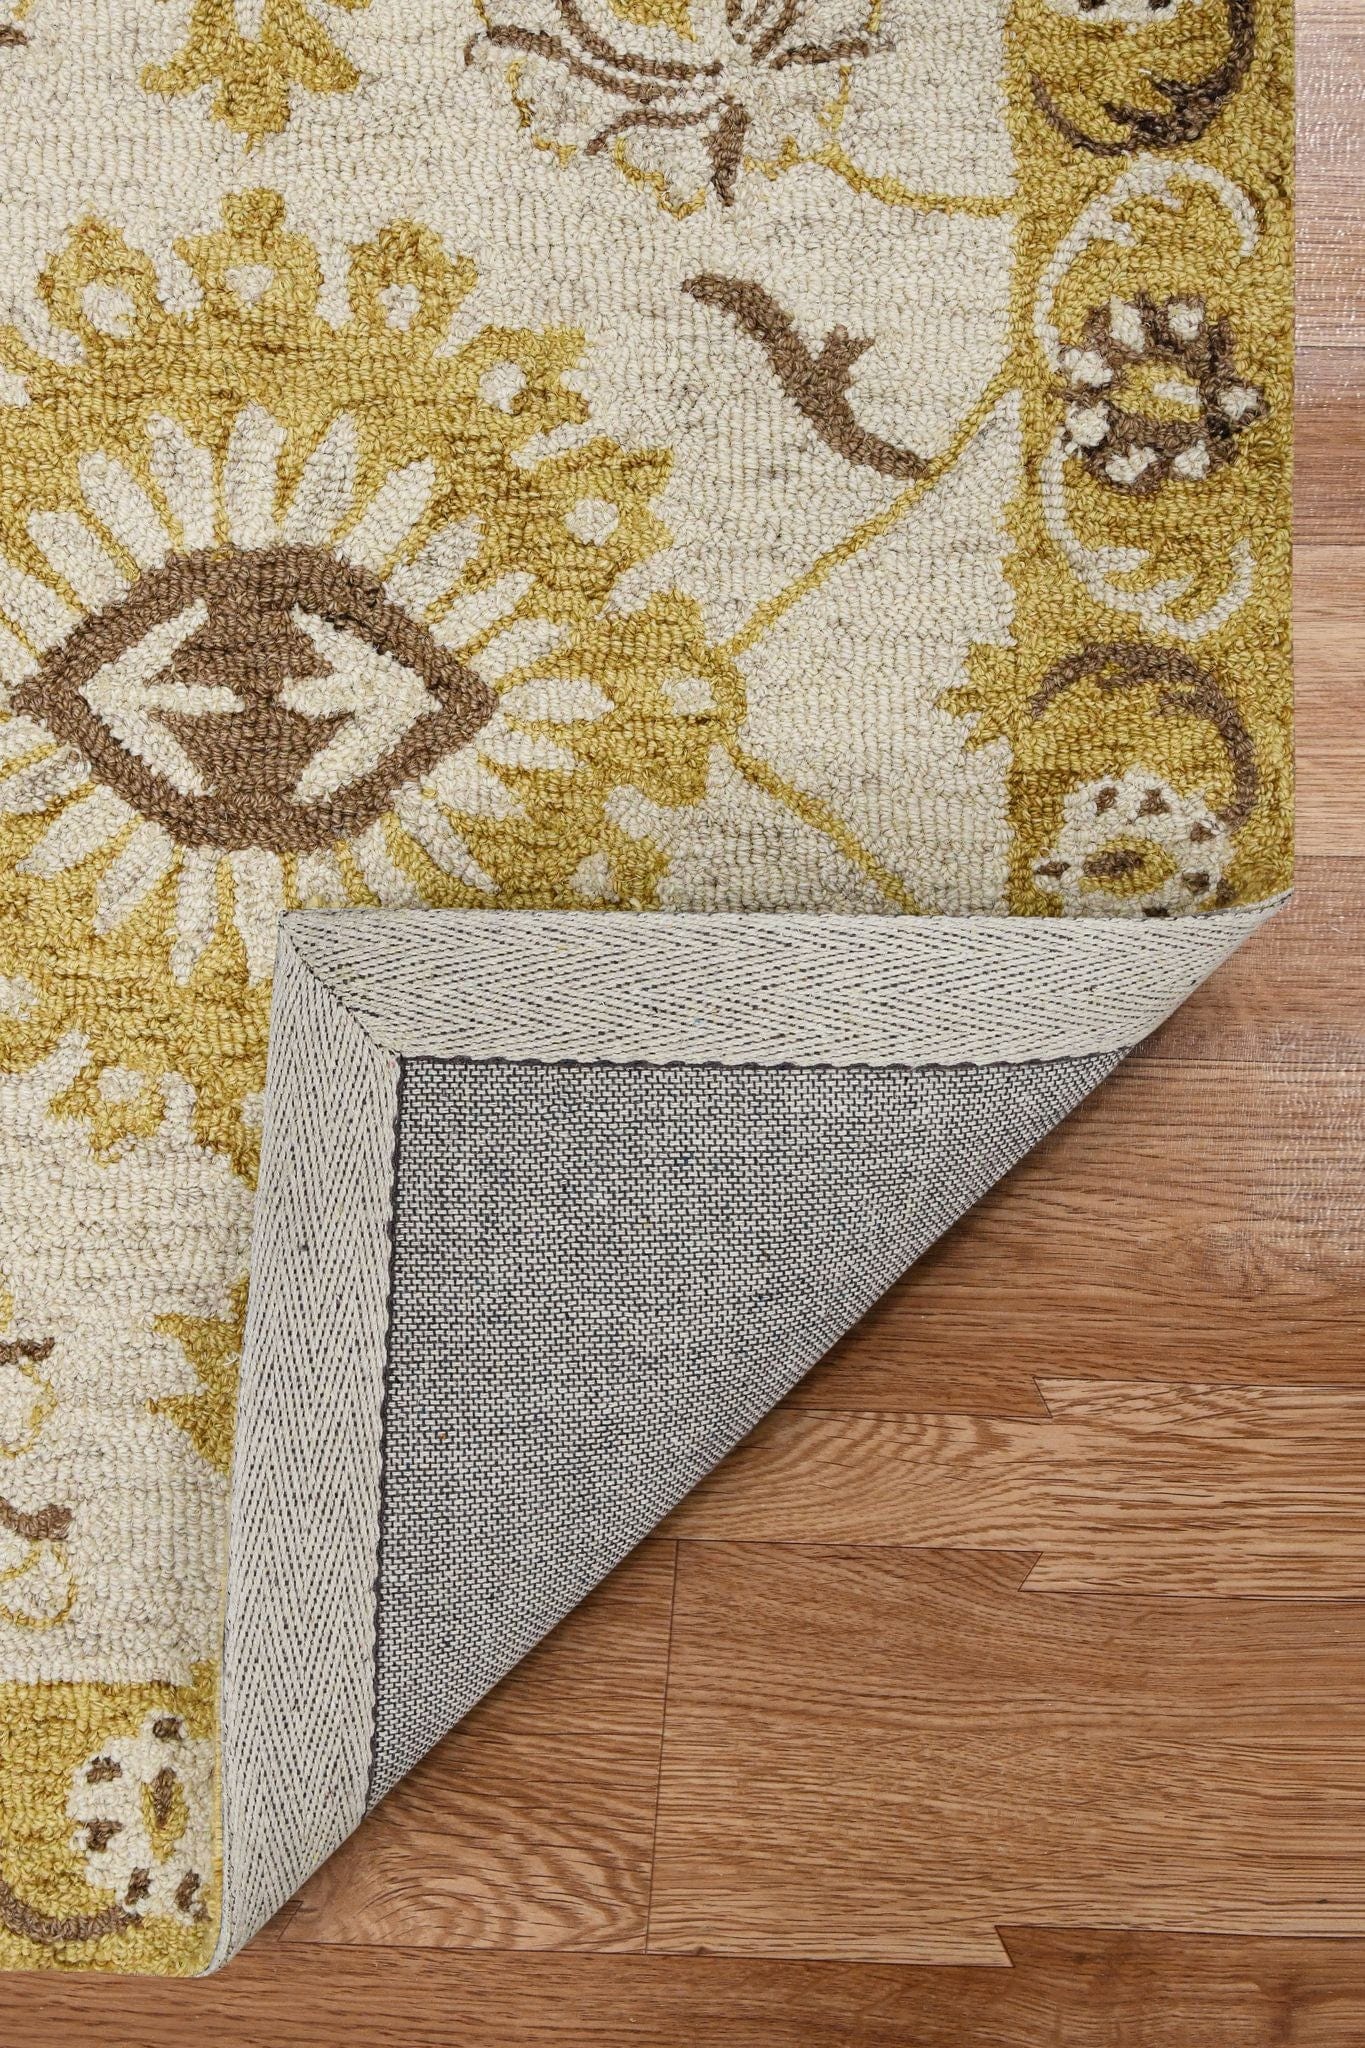 Gold Wool Romania 5x8 Feet  Hand-Tufted Carpet - Rug